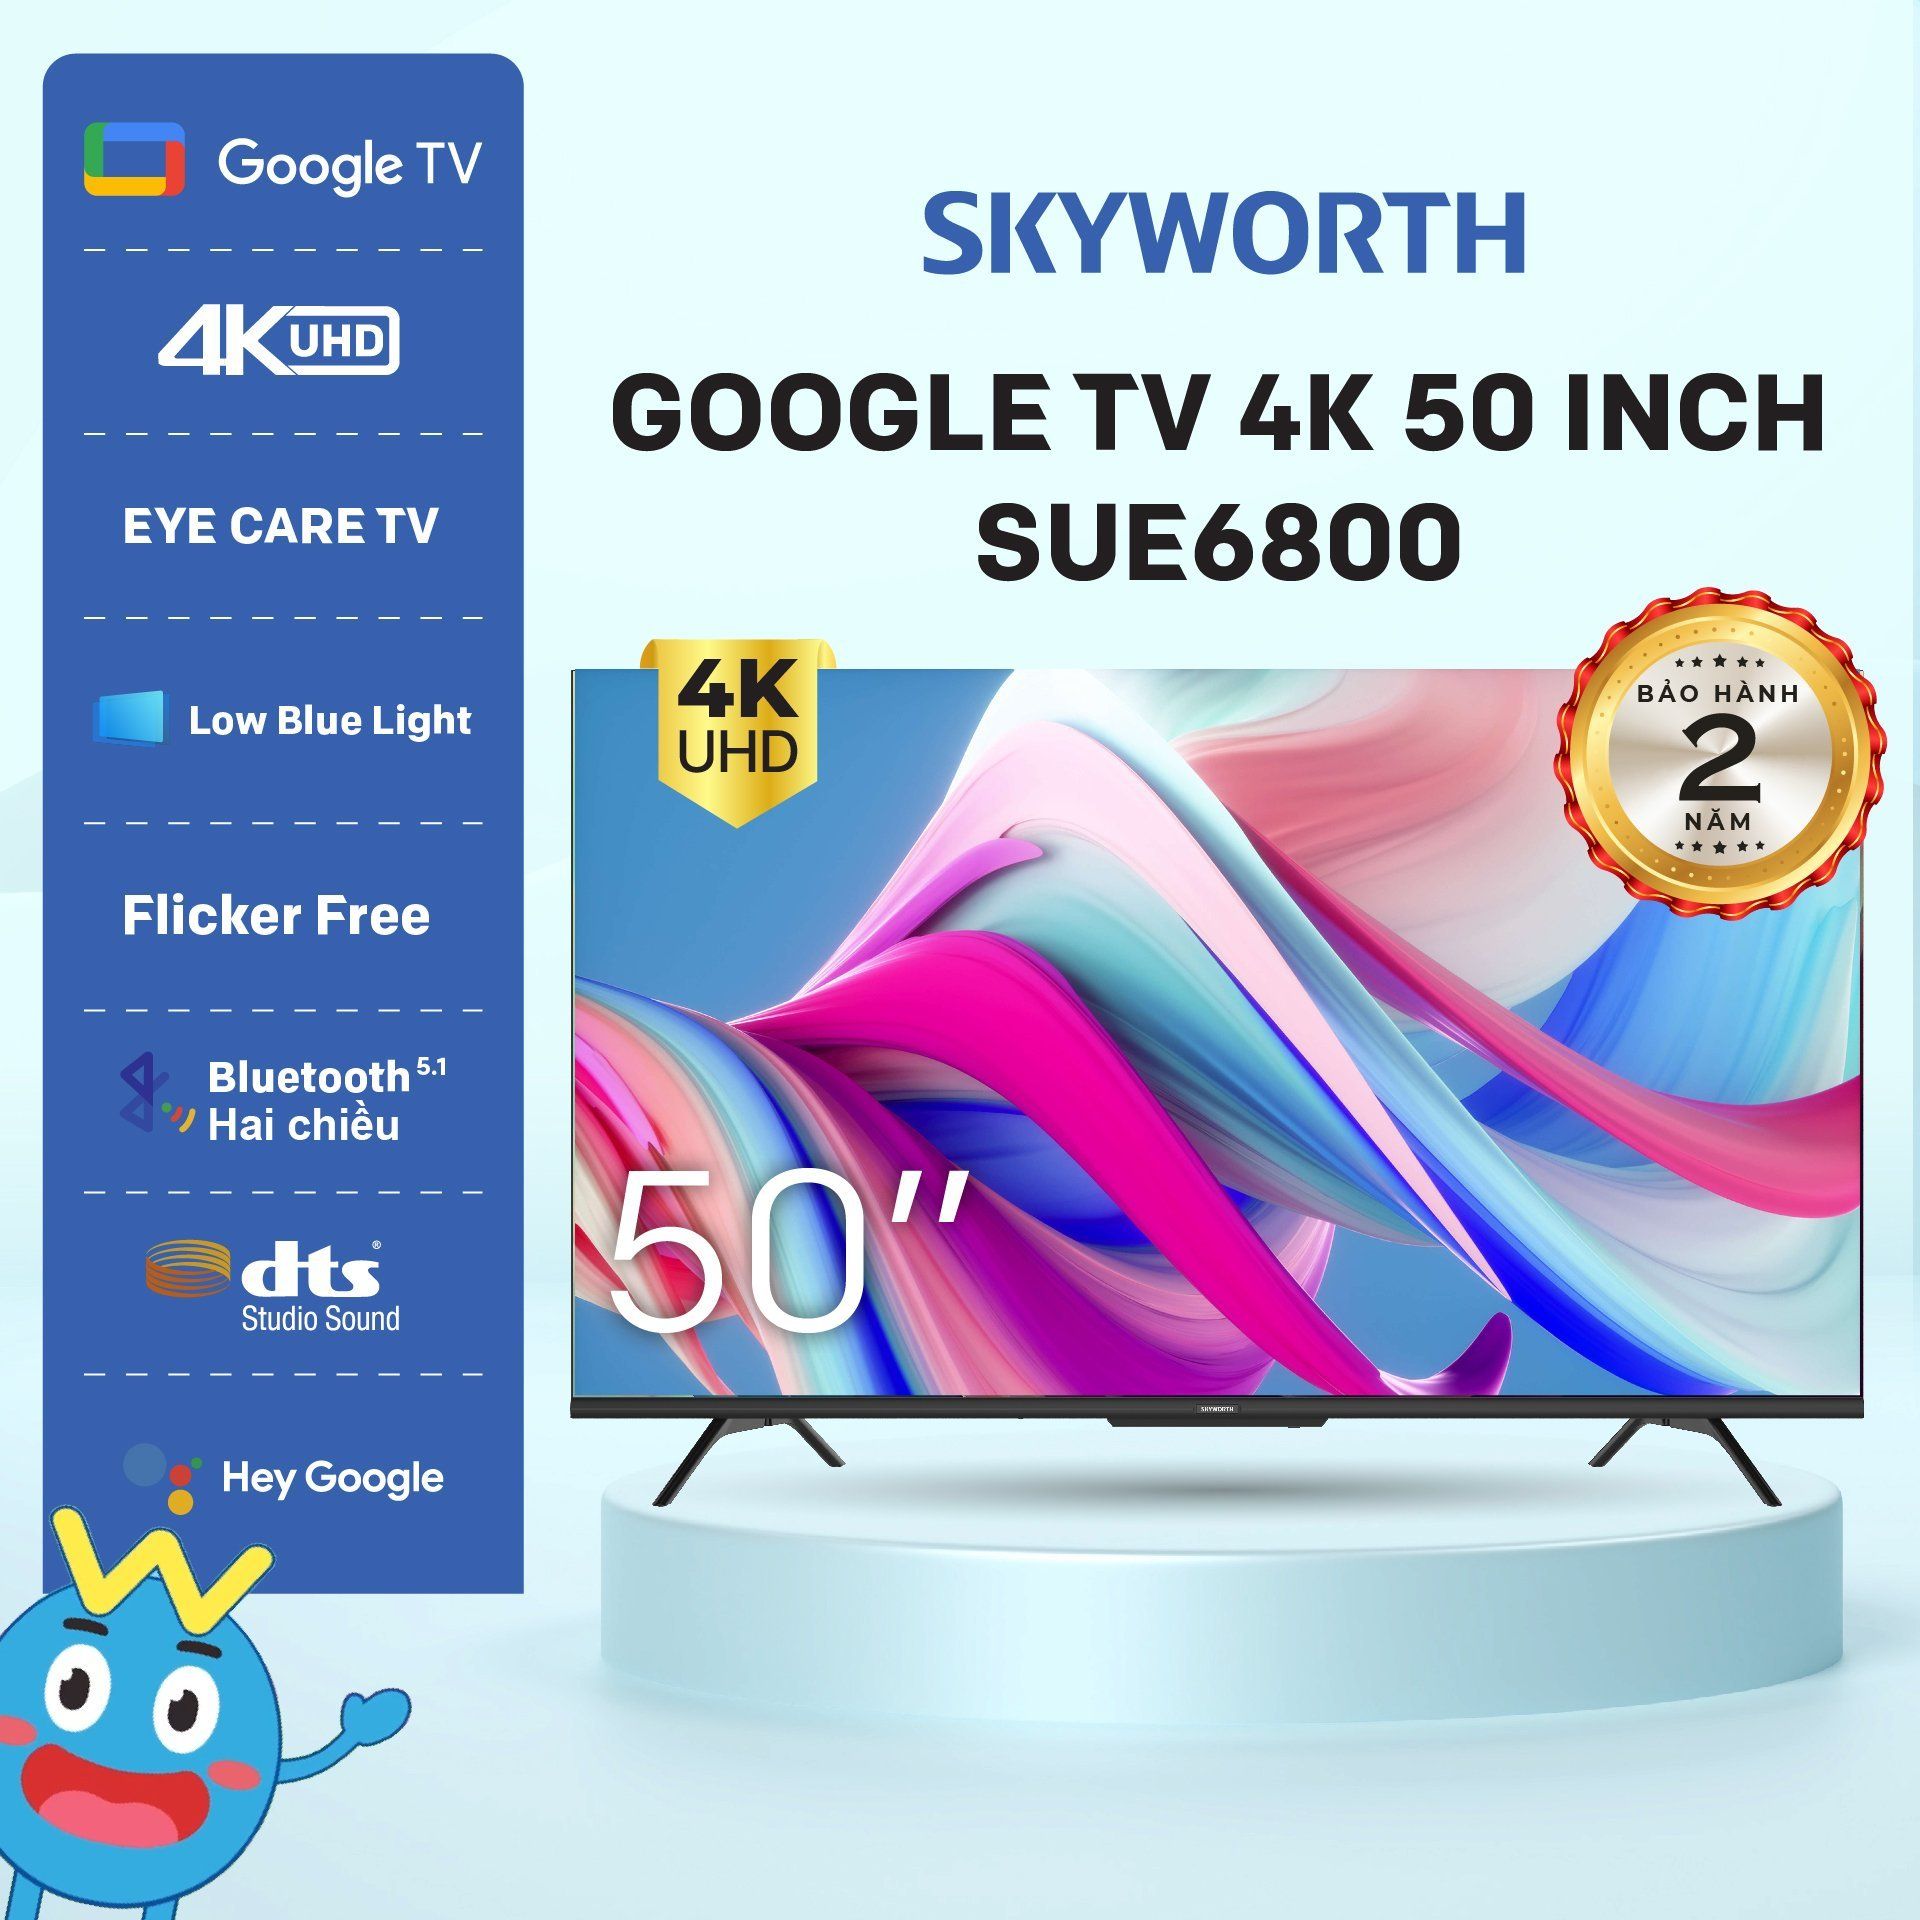  SUE6800 | 4K UHD 50” Google TV 